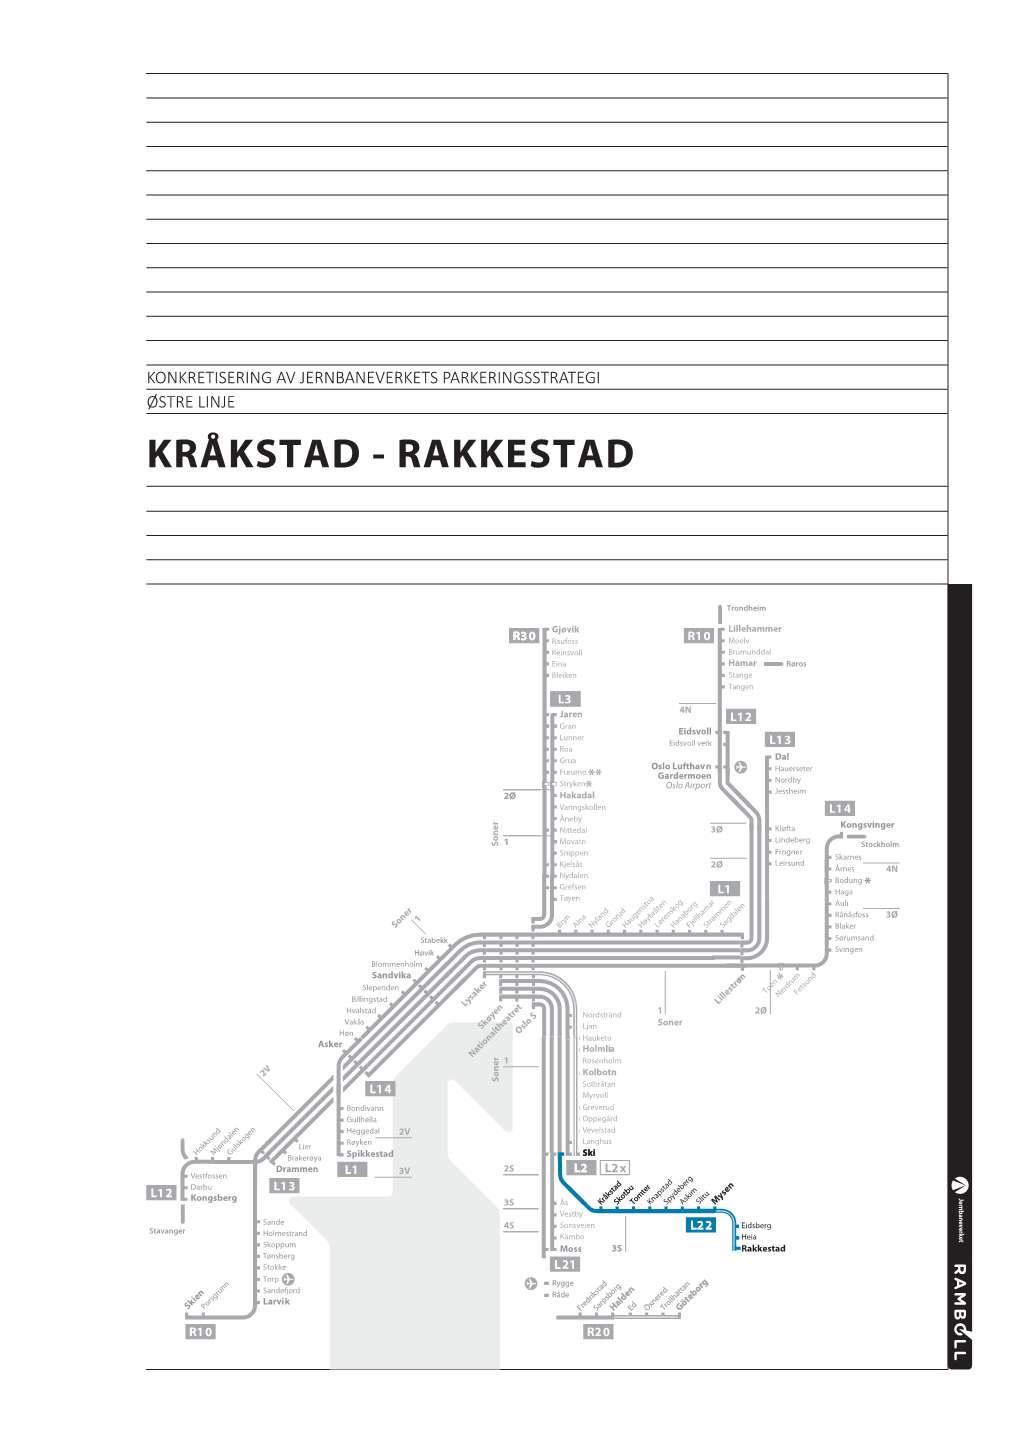 Konkretisering Av Jernbaneverkets Parkeringsstrategi Østre Linje Kråkstad - Rakkestad